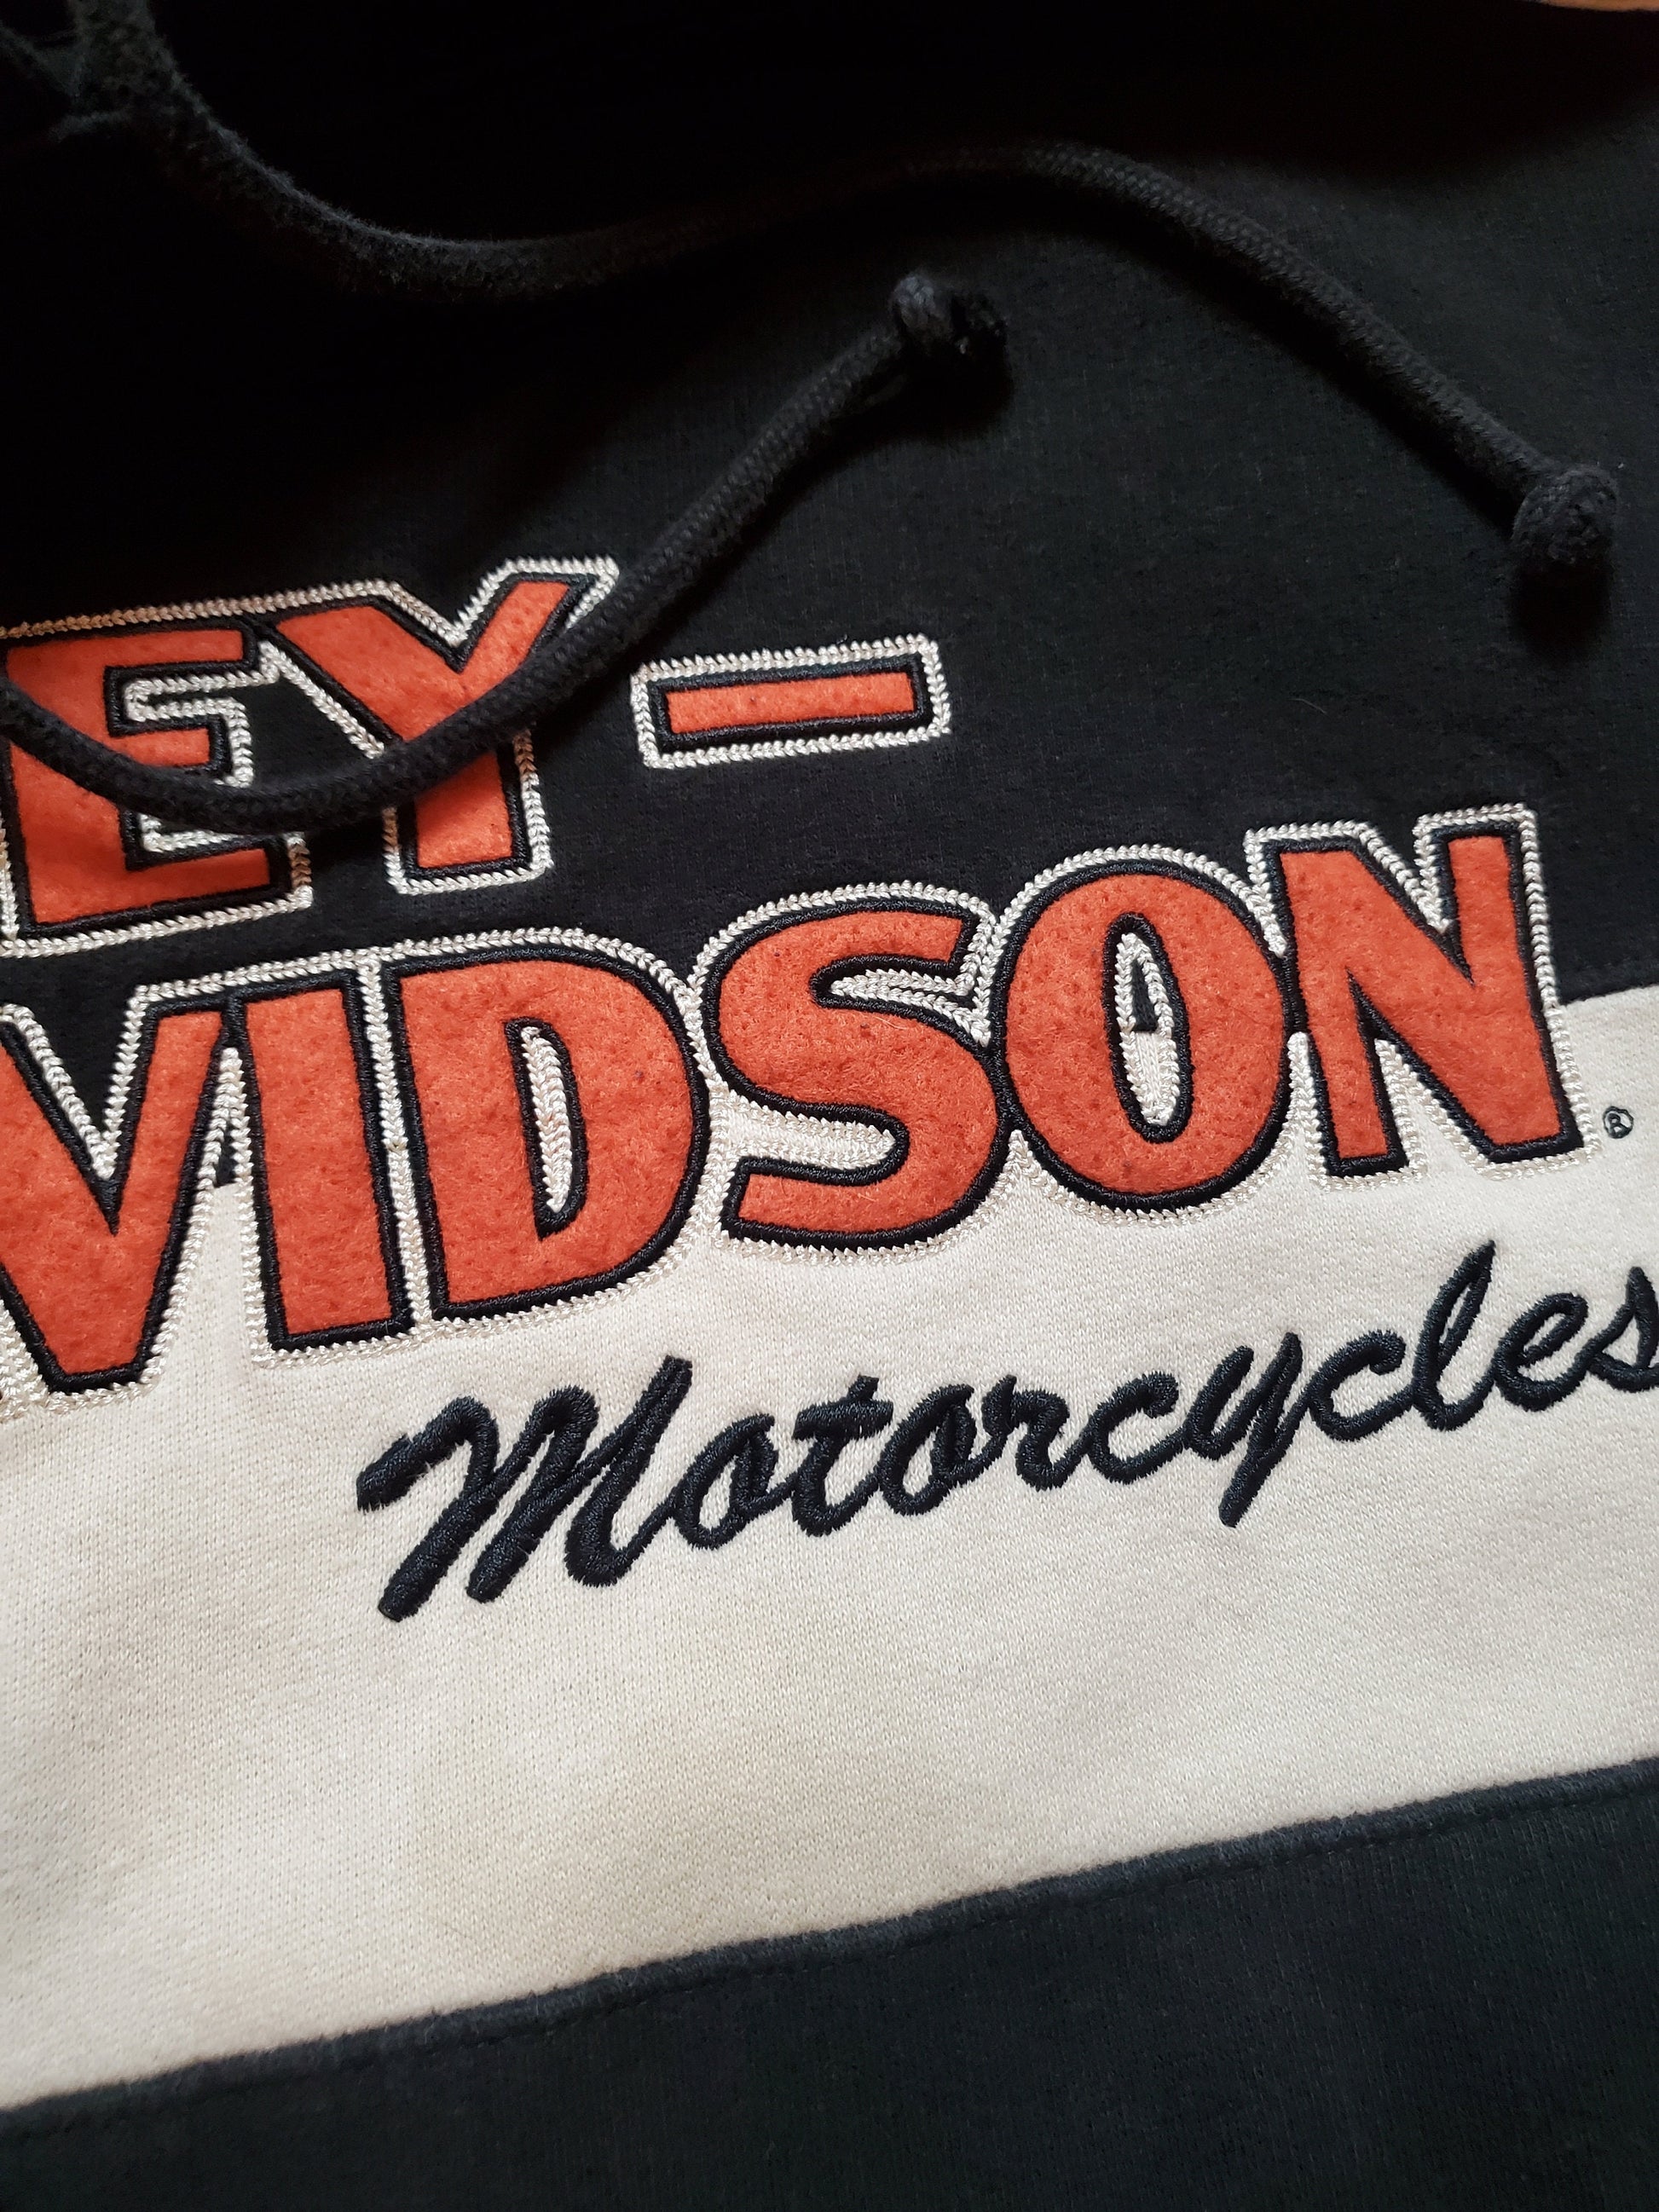 2000s Harley Davidson Hoodie Sweatshirt Size L